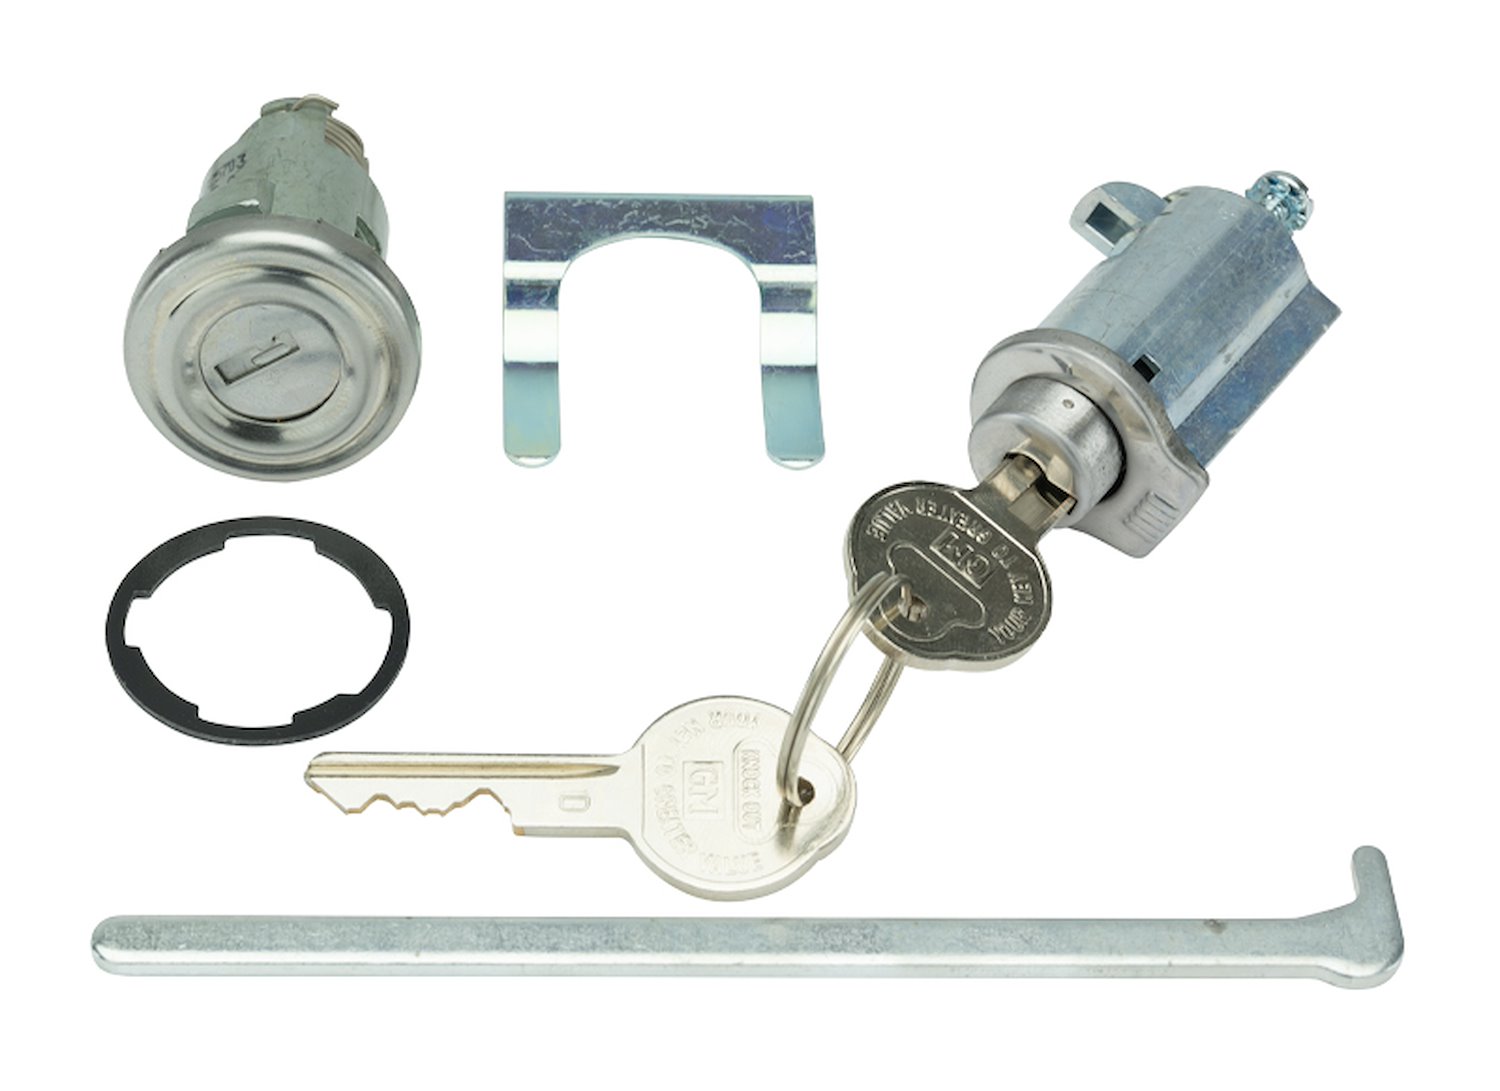 Trunk & Glovebox Lock Set Fits Select 1955-1957 GM Models [Original Pearhead Keys]